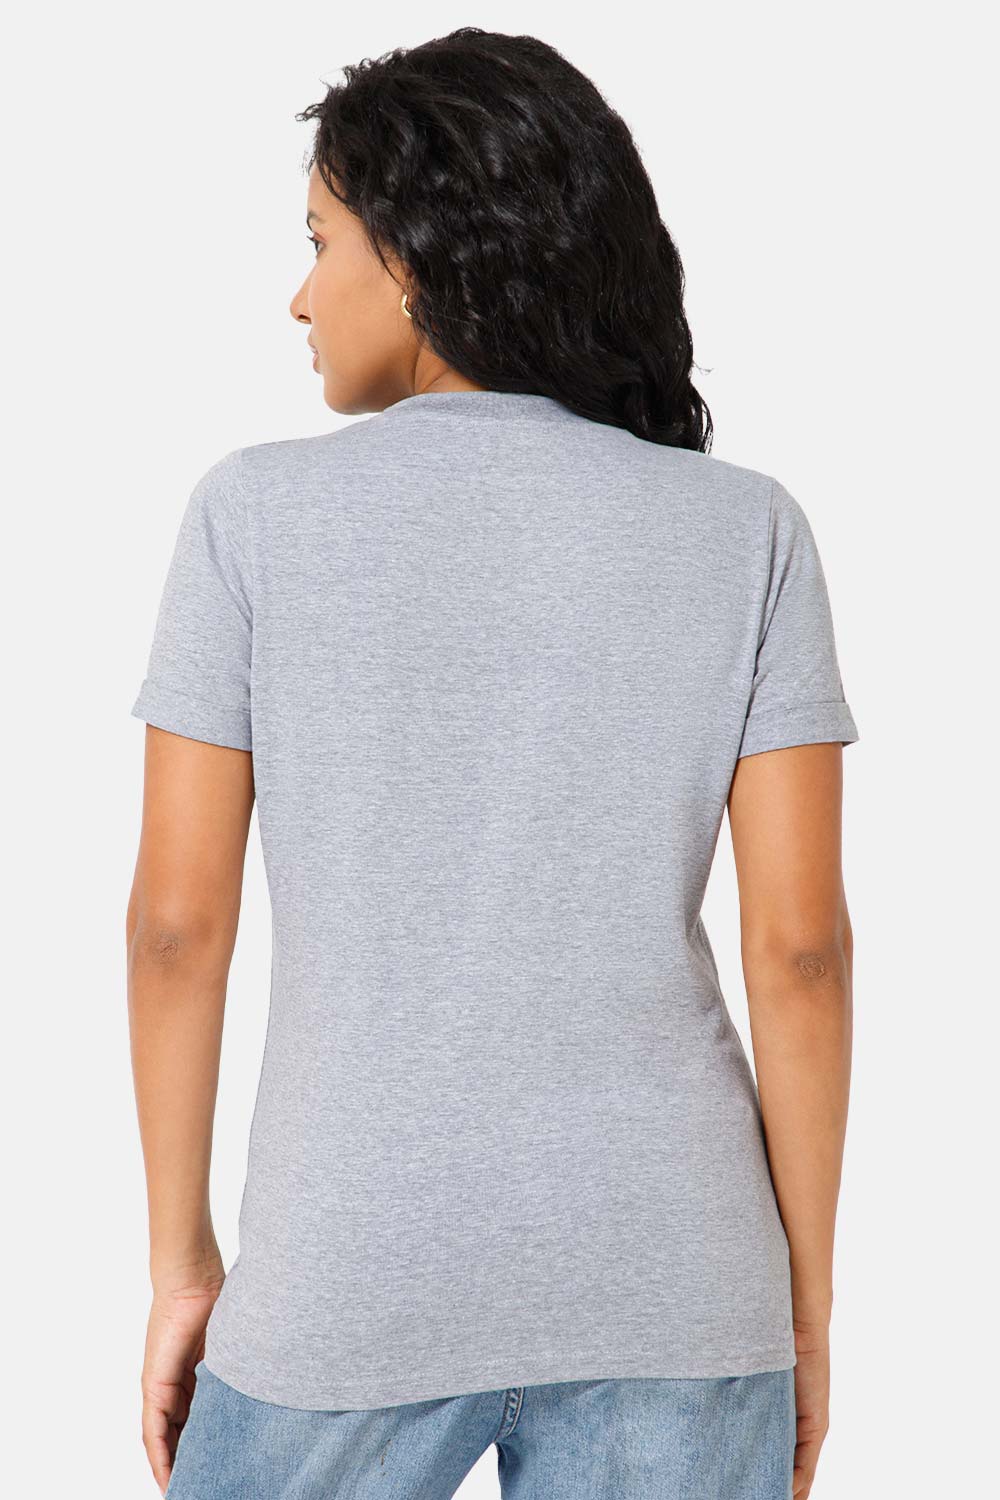 Jusperf Women Half Sleeve Crew Neck T-shirt  - Grey melange - SD24